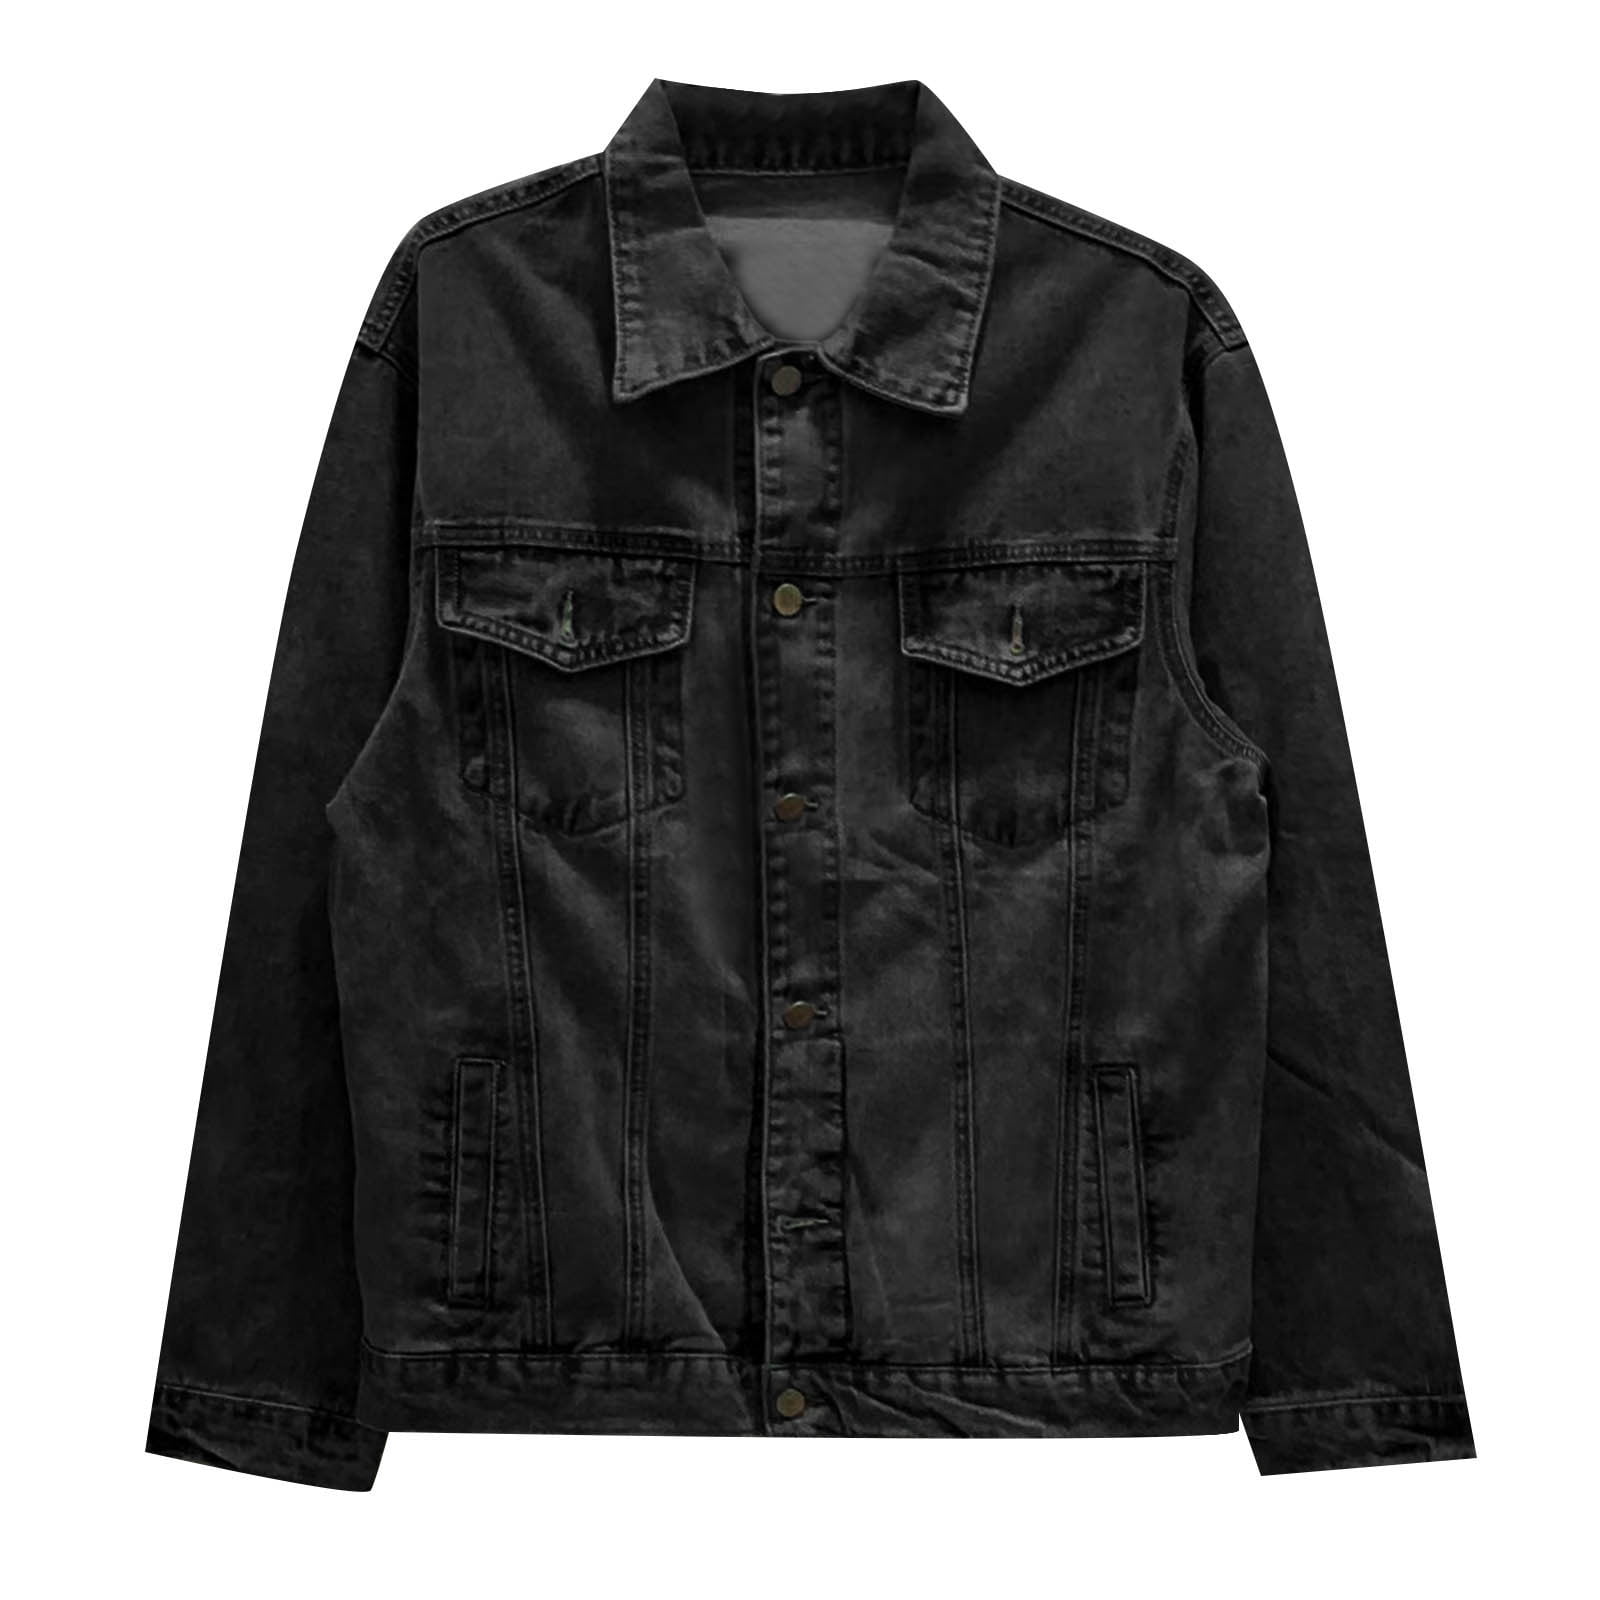 kpoplk Men Denim Jean Jacket Coat Pocket Classic Slim Fit Casual Button up  Trucker Jean Coat Black,5XL - Walmart.com